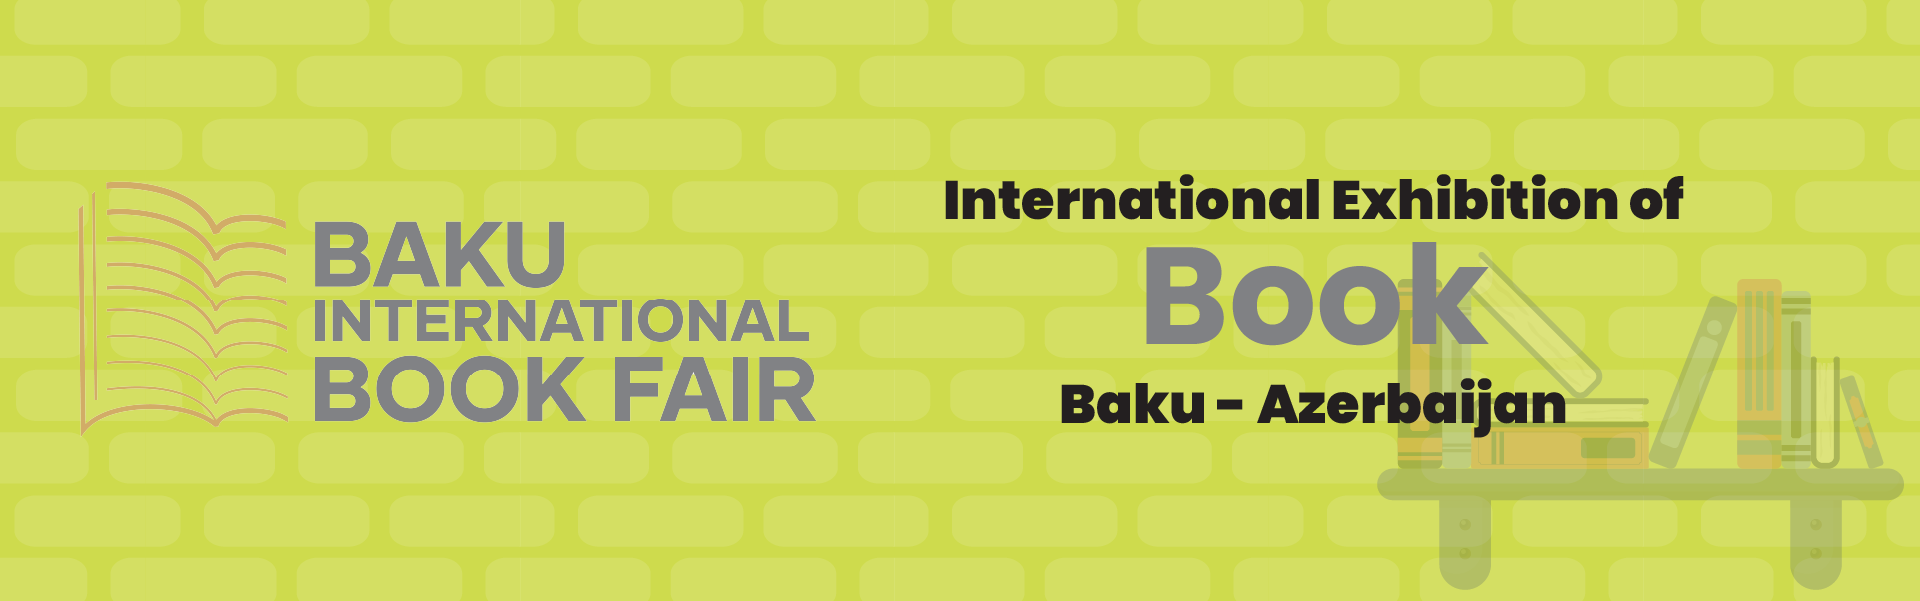 International Book Fair Baku Azerbaijan